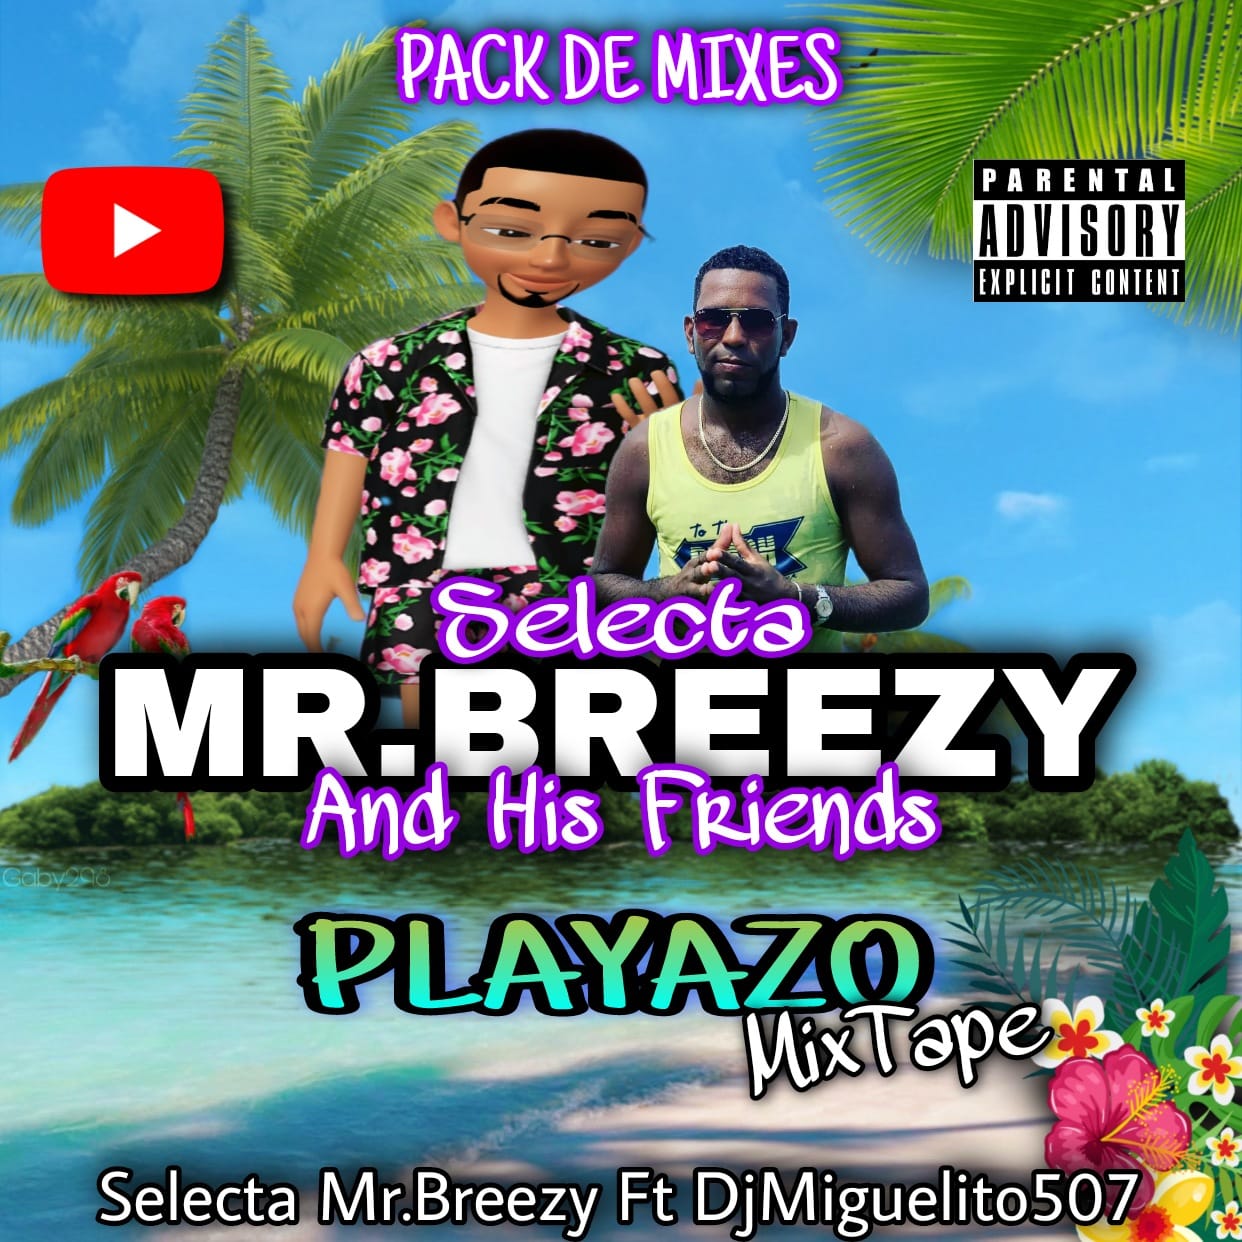 (Pack de Mixes) Playazo Mixtape - Selecta Mr.Breezy Ft DjMiguelito507